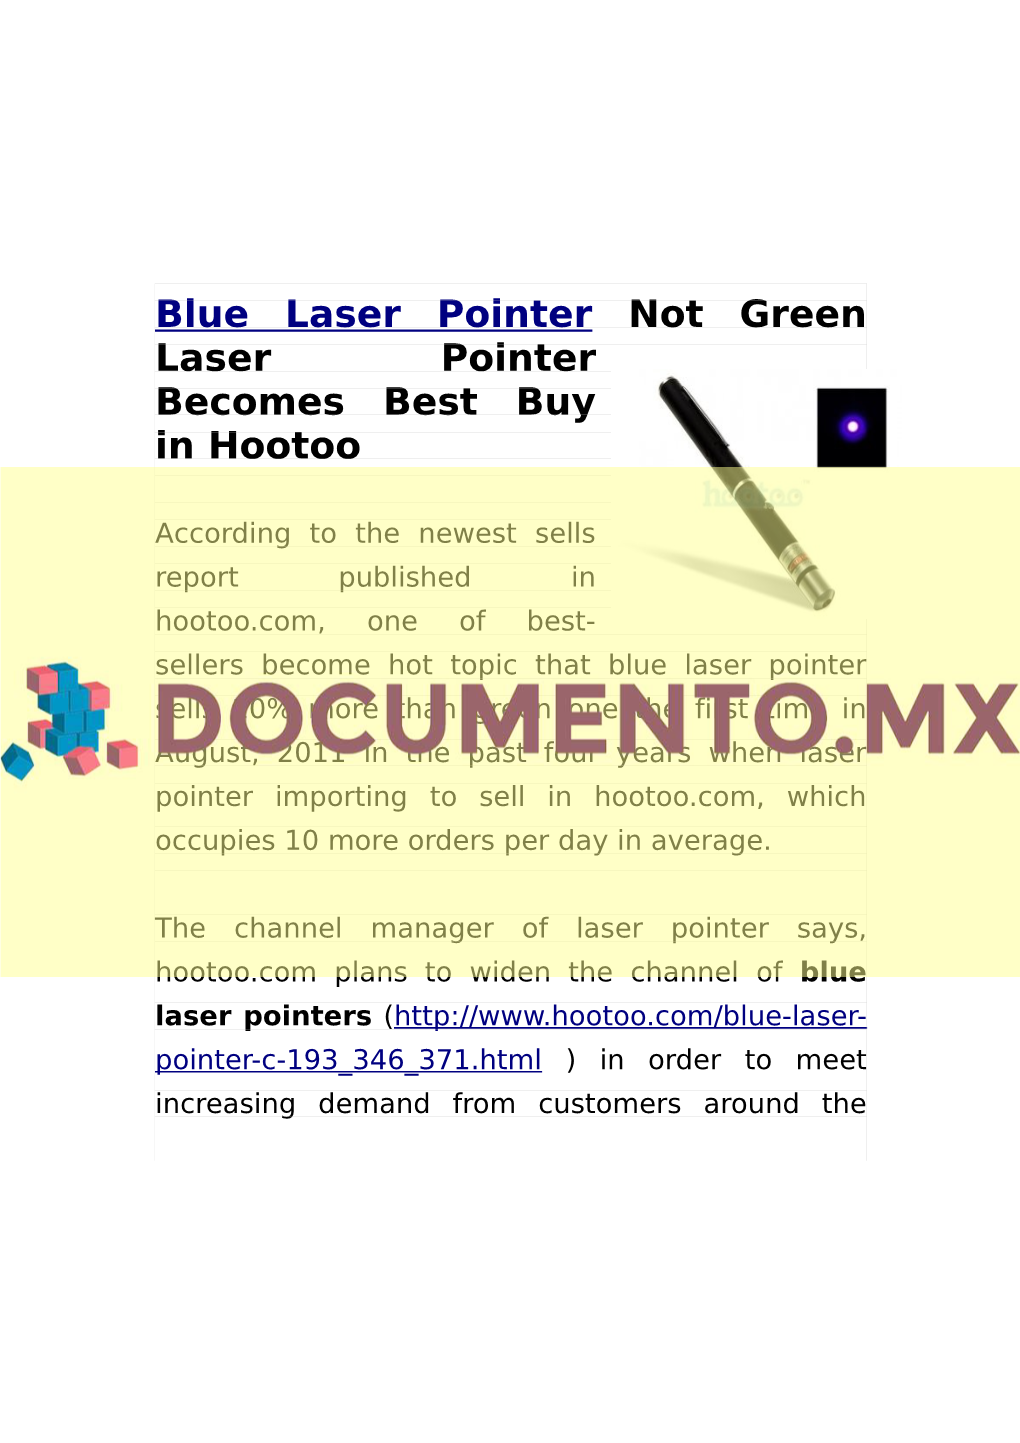 Blue Laser Pointers